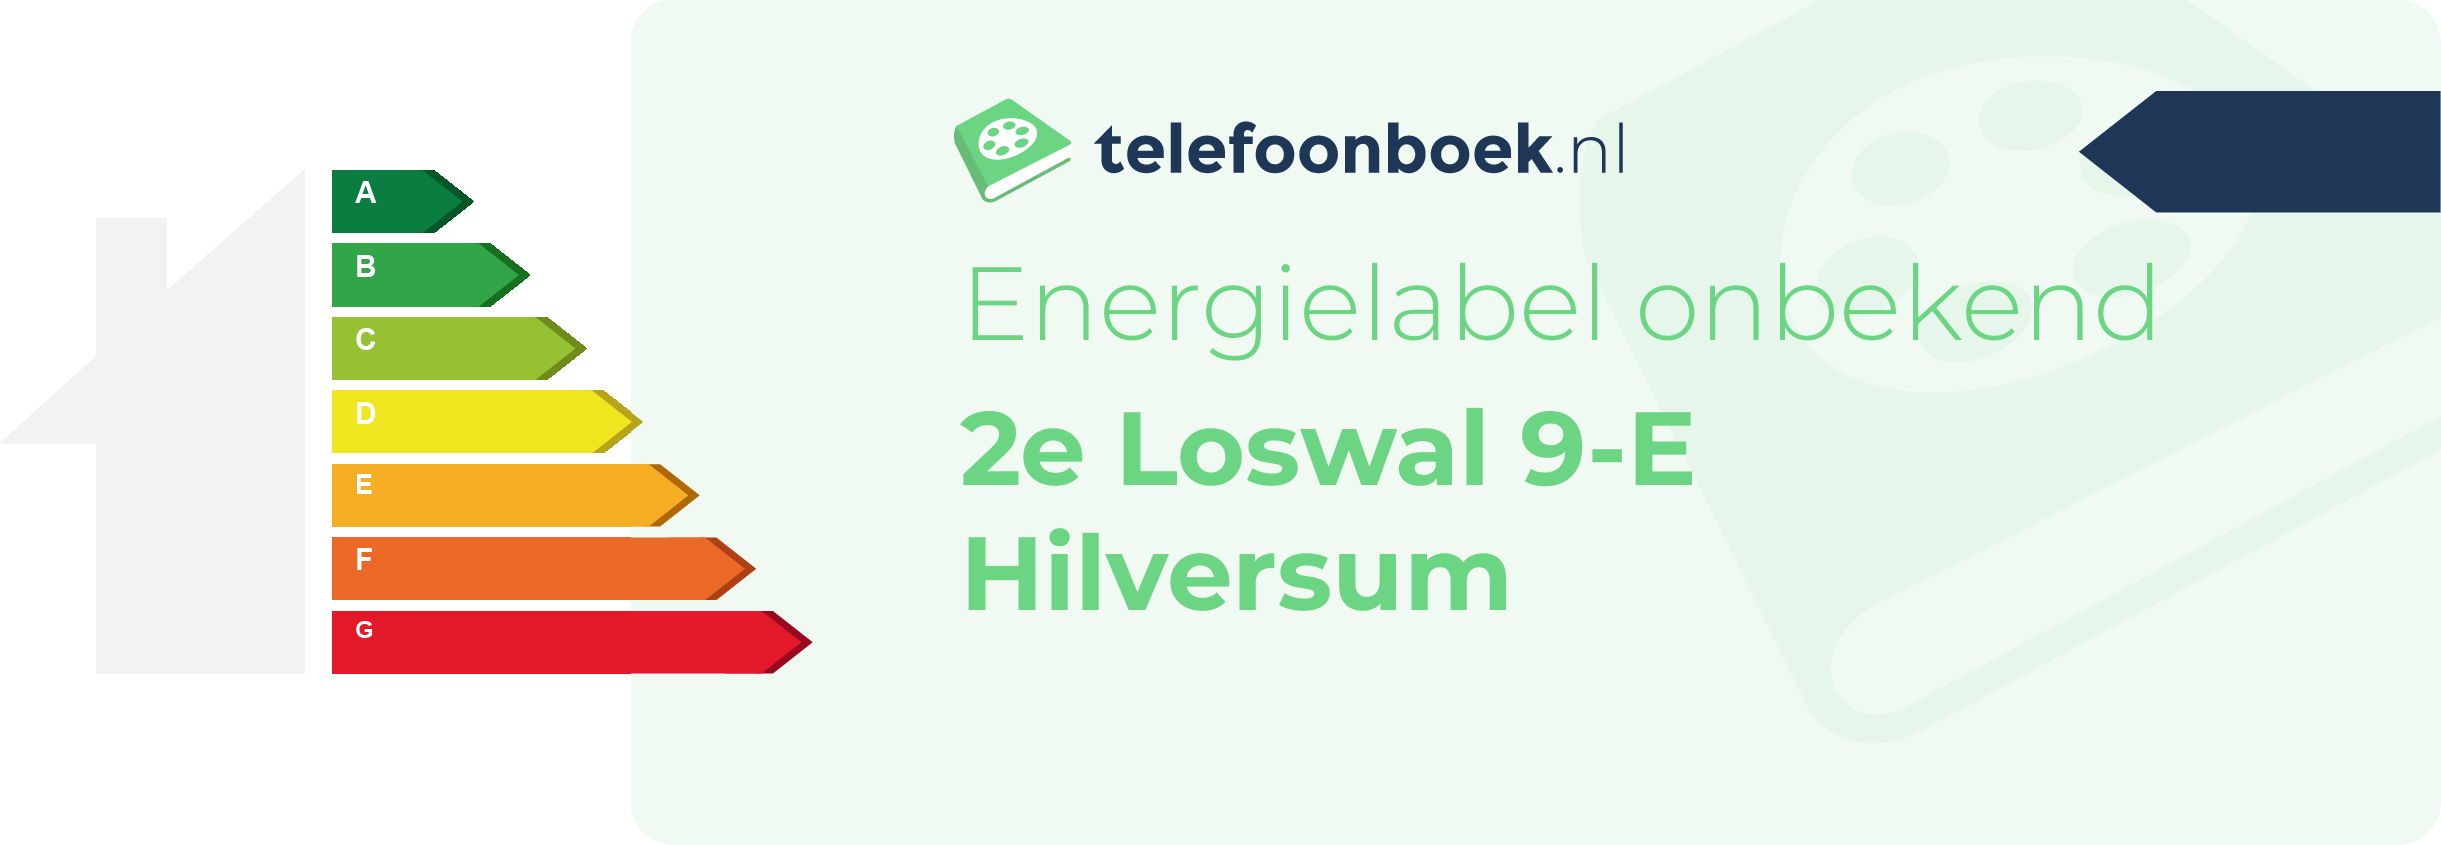 Energielabel 2e Loswal 9-E Hilversum